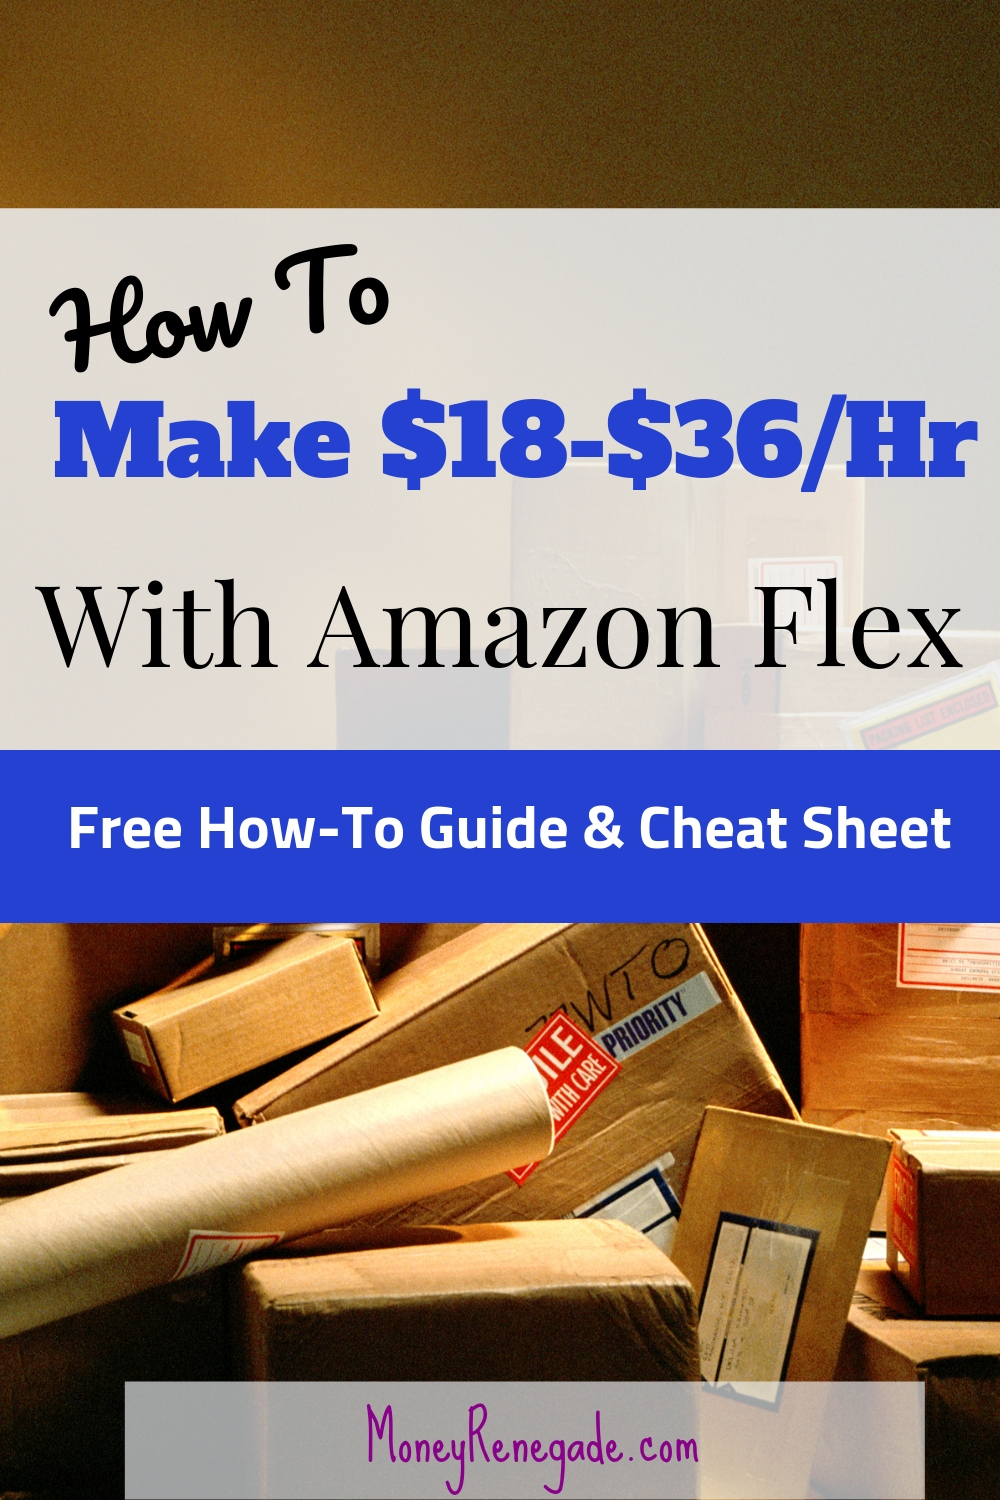 How to Make $18-$36/hour Amazon Flex Guide & Cheat Sheet